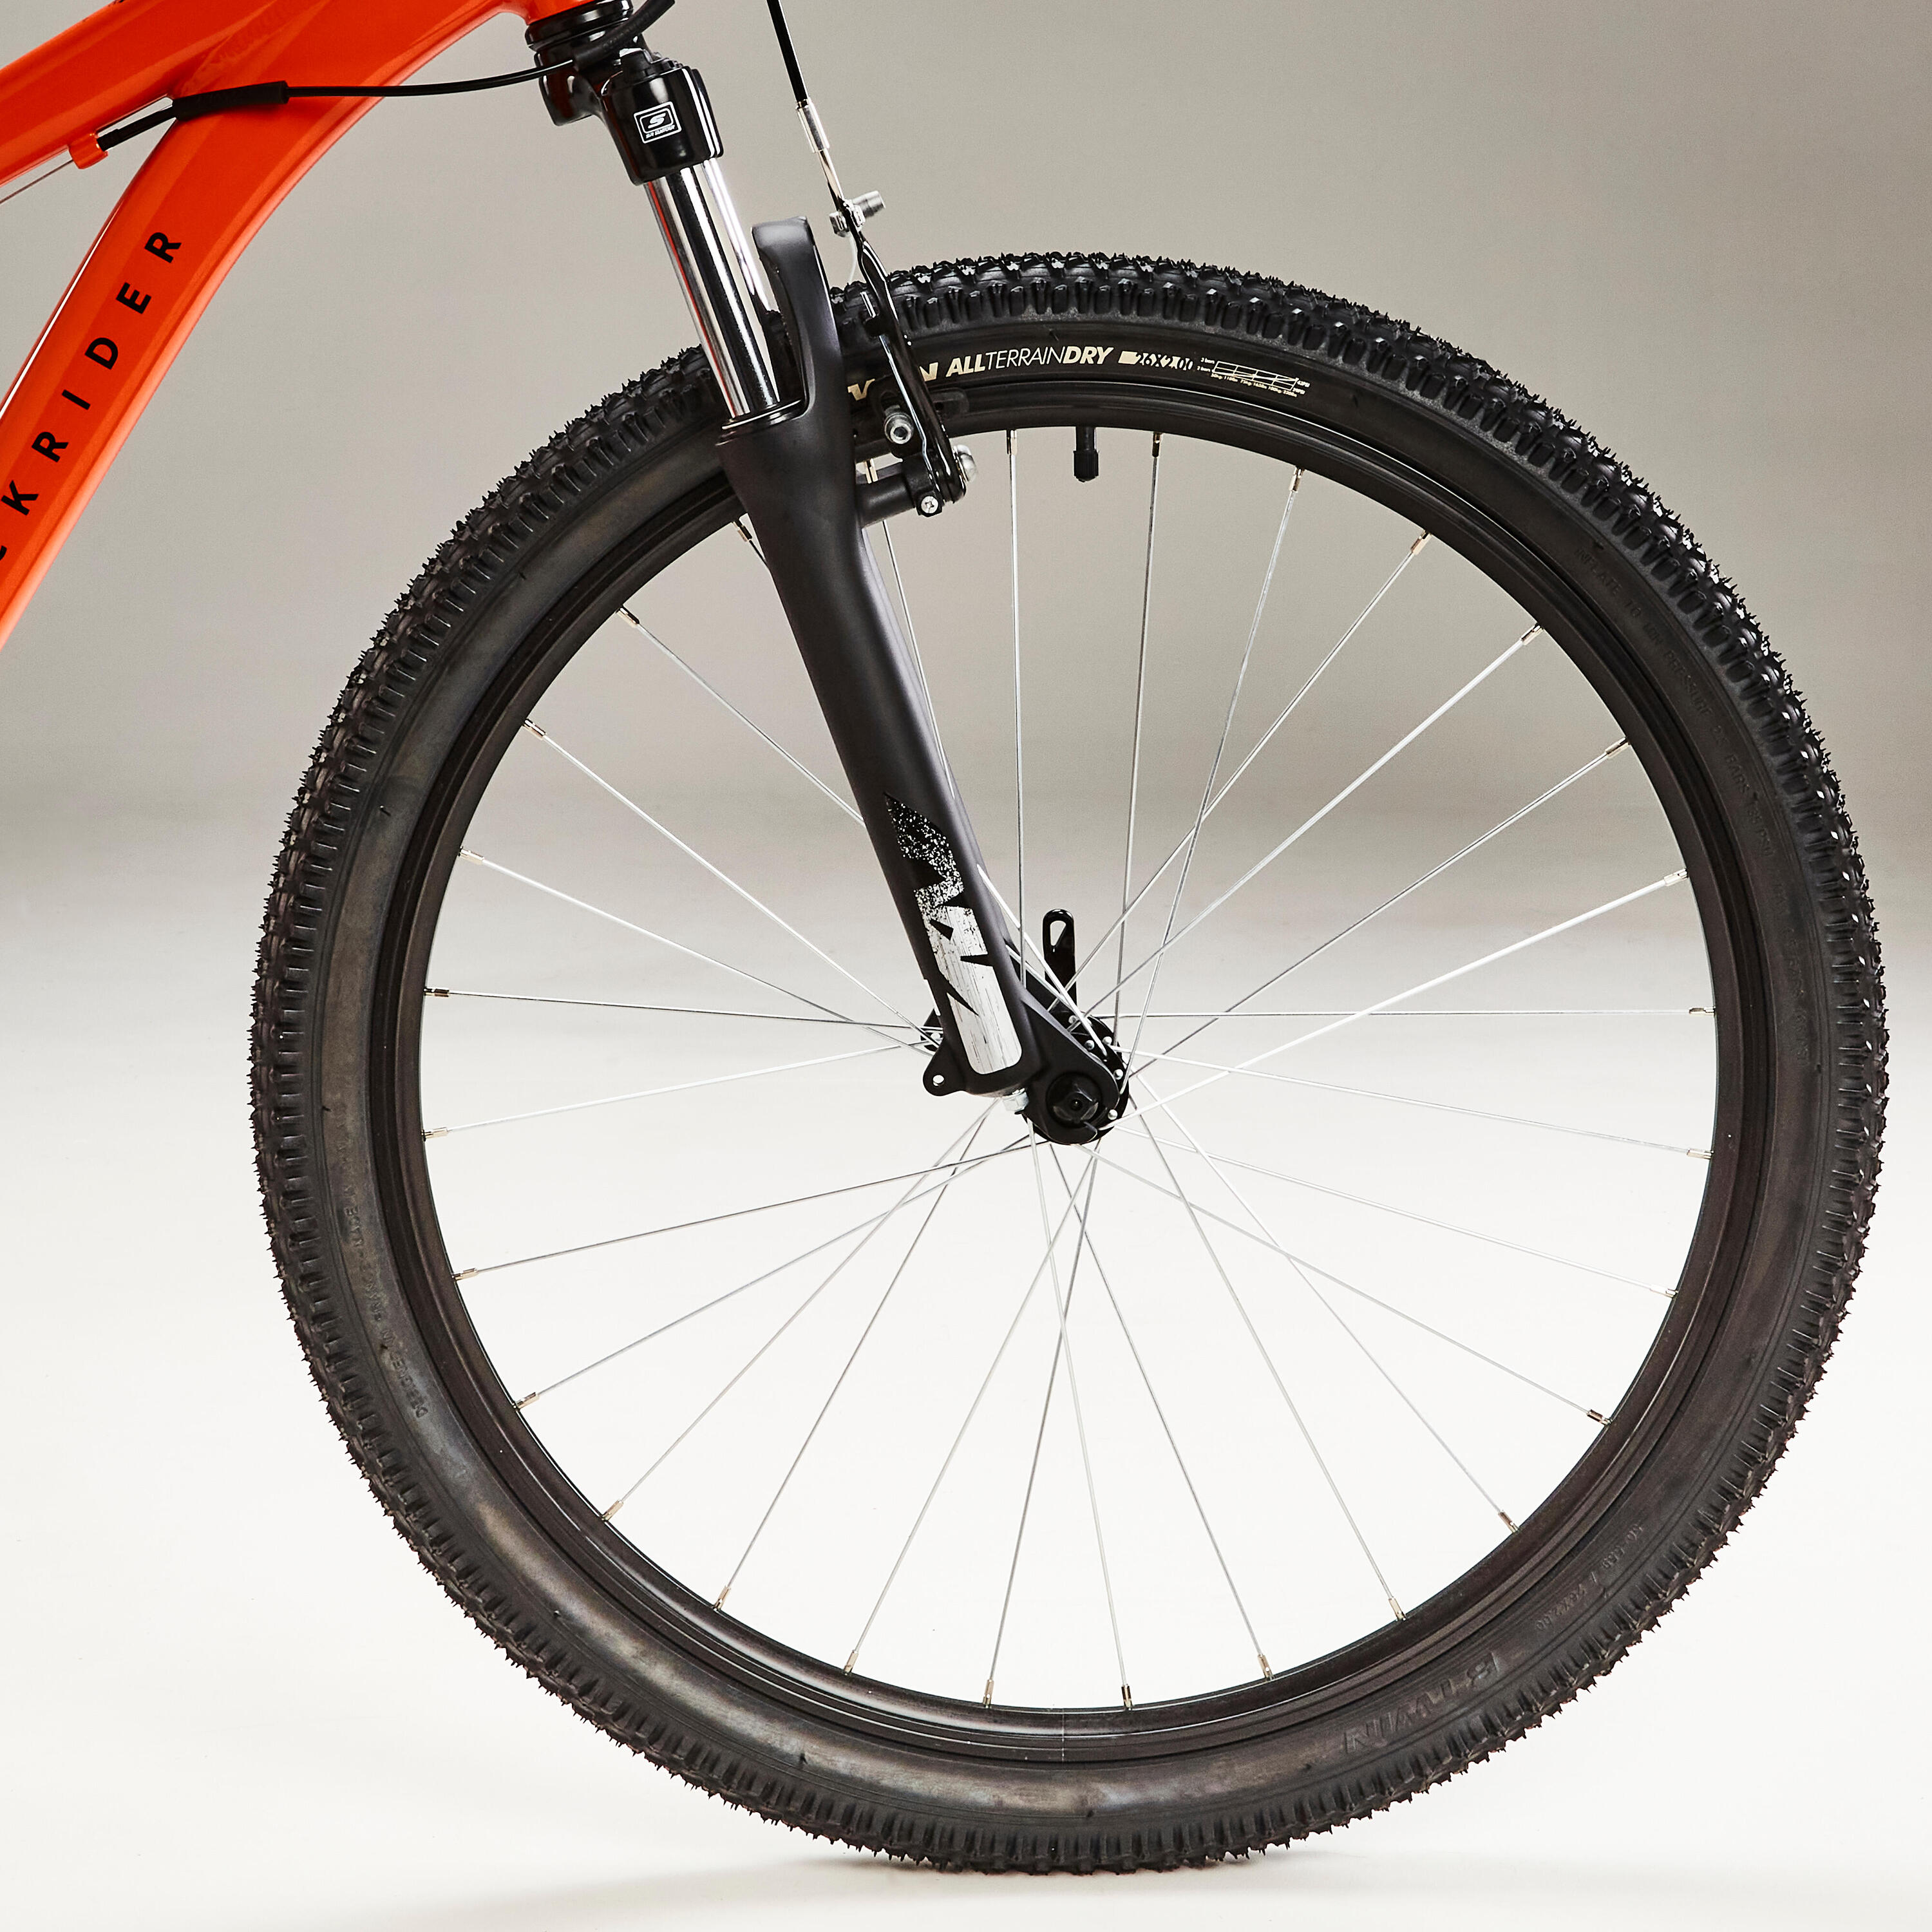 Kids' 26-inch lightweight aluminium mountain bike, orange 5/12